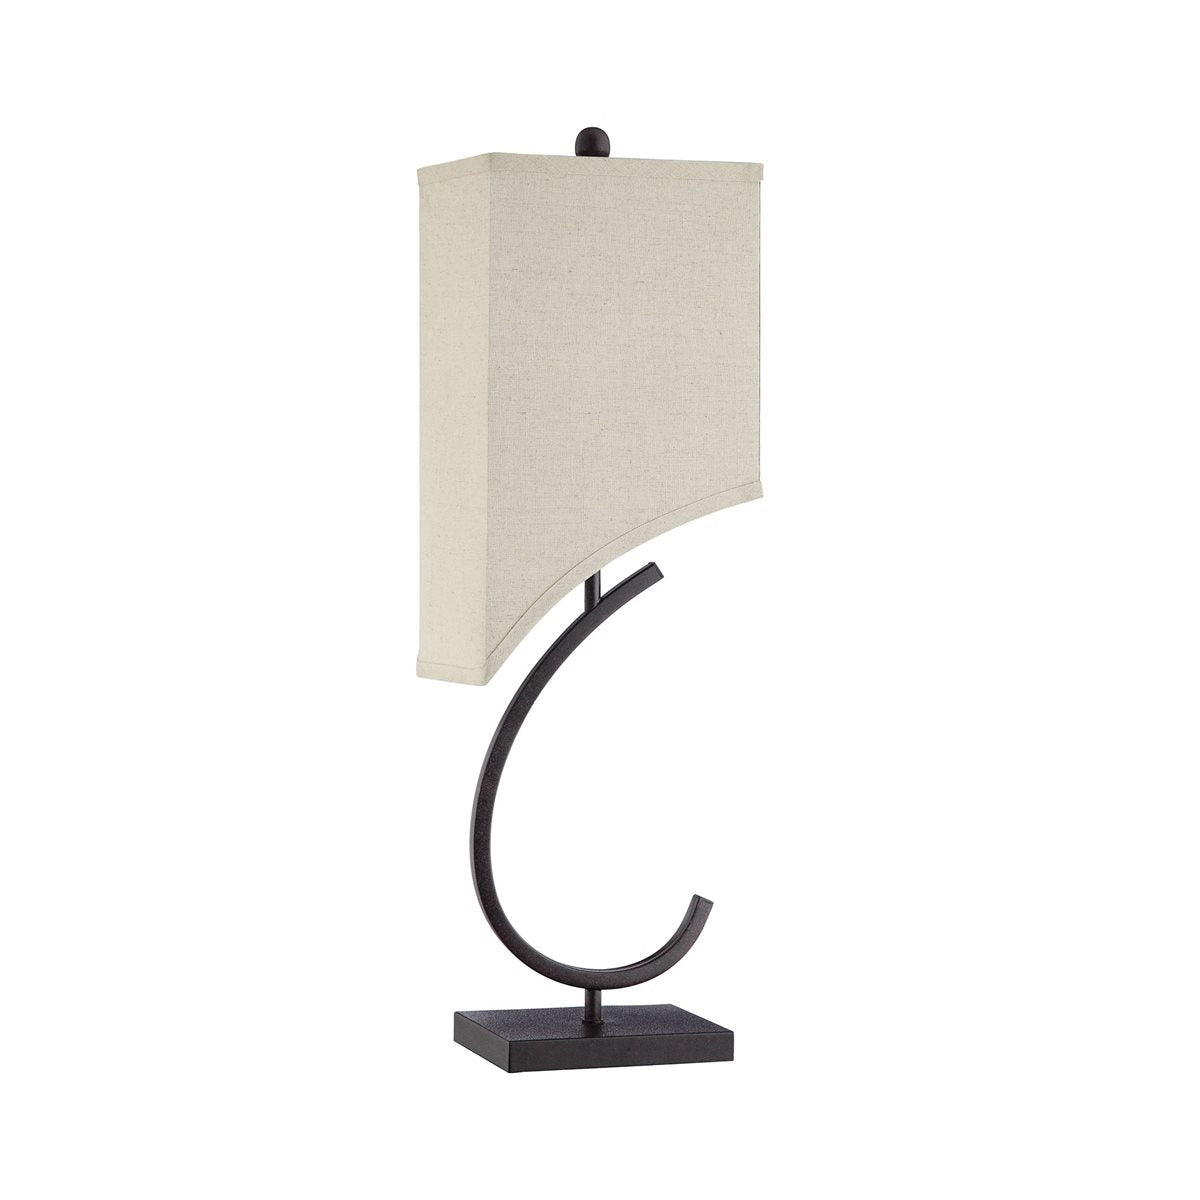 Stein World Chastain Table Lamp Black 76054